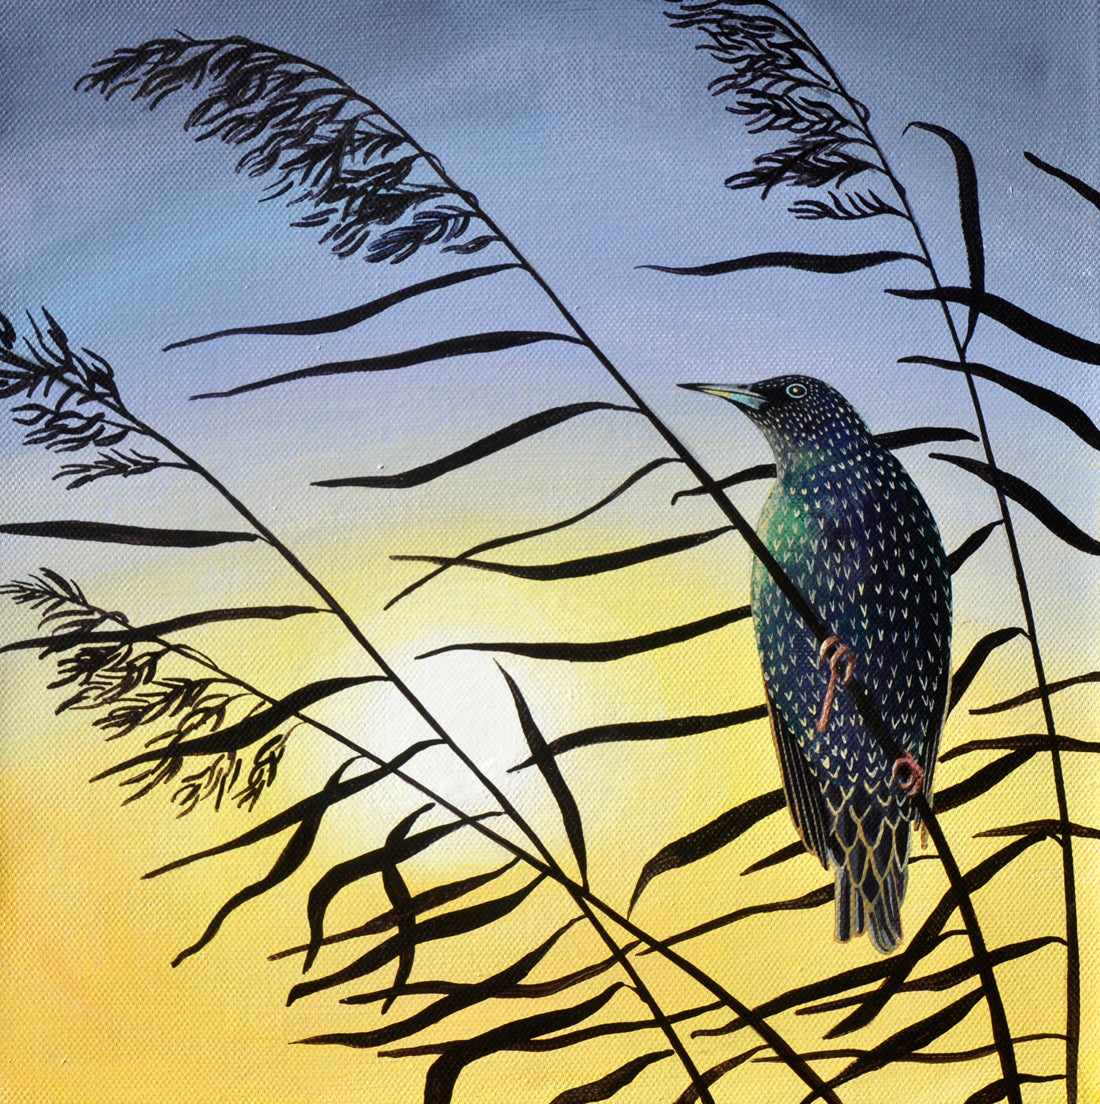 Starling at sunset - - a starlings greetings card